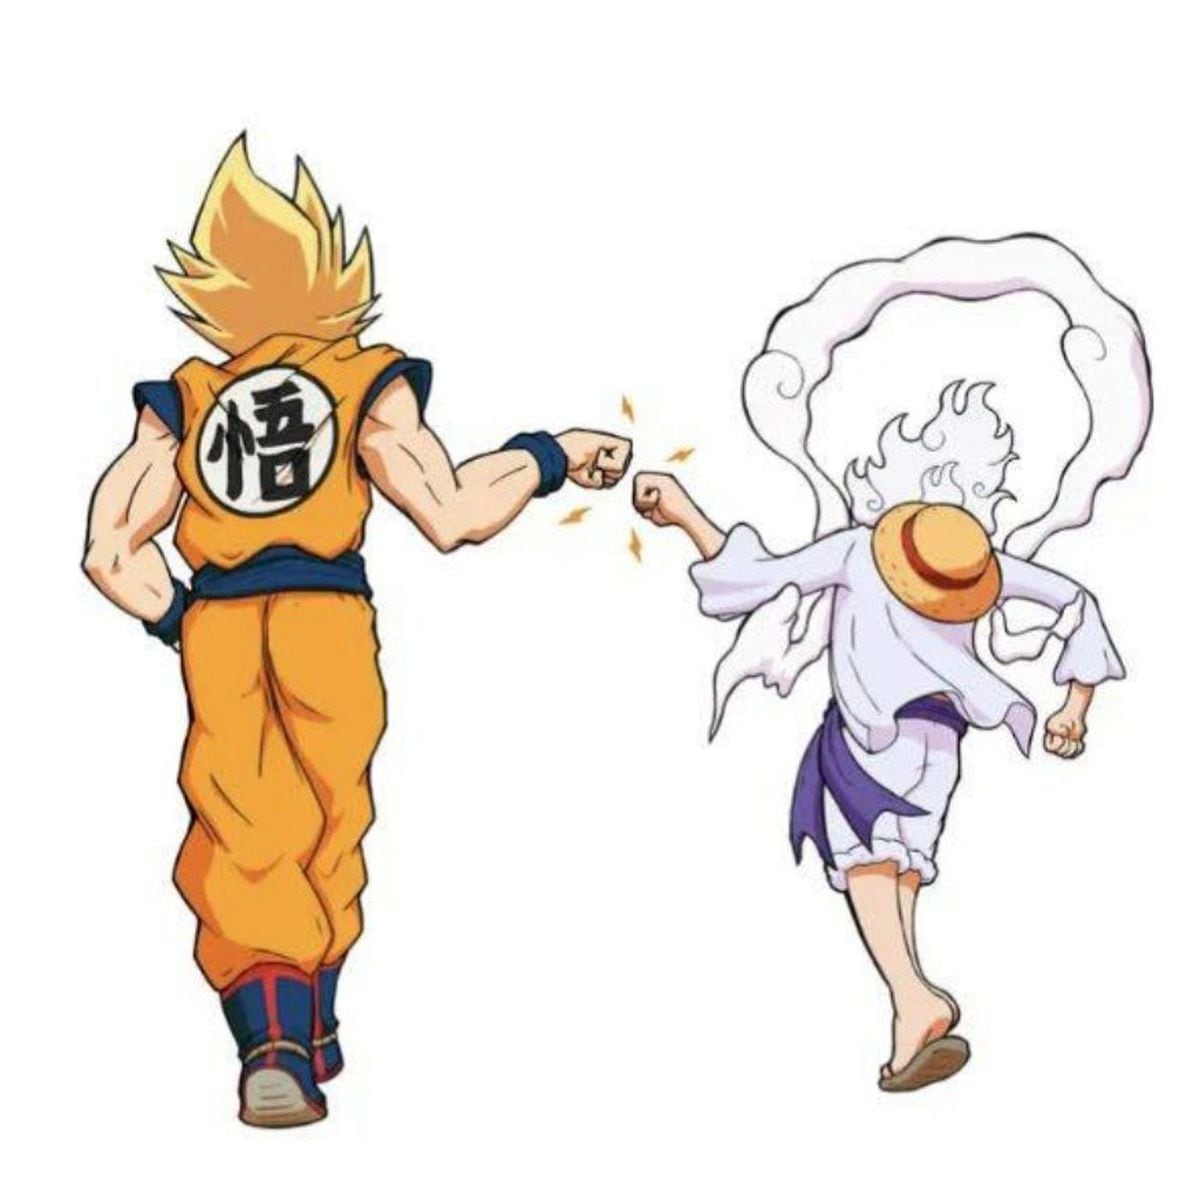 Dragon Ball' Fan Animates Goku Going Super Saiyan 5